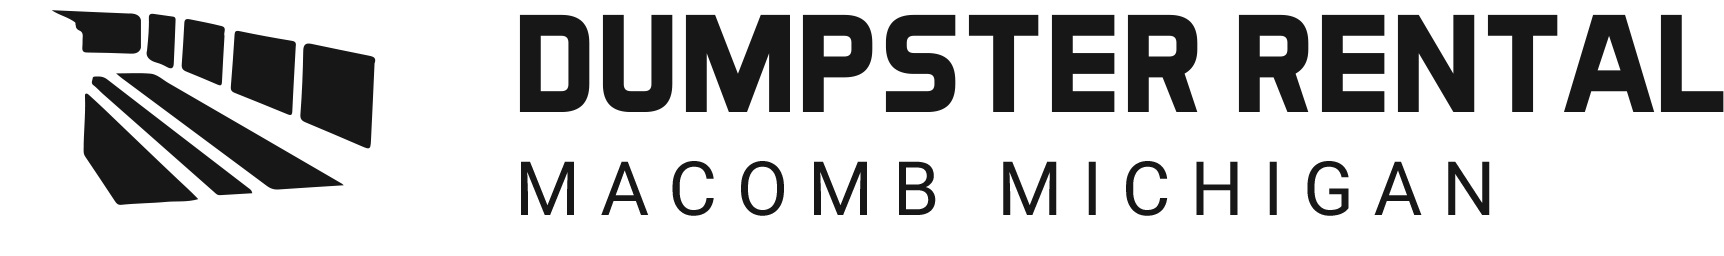 Dumpster Rental Macomb MI's Logo